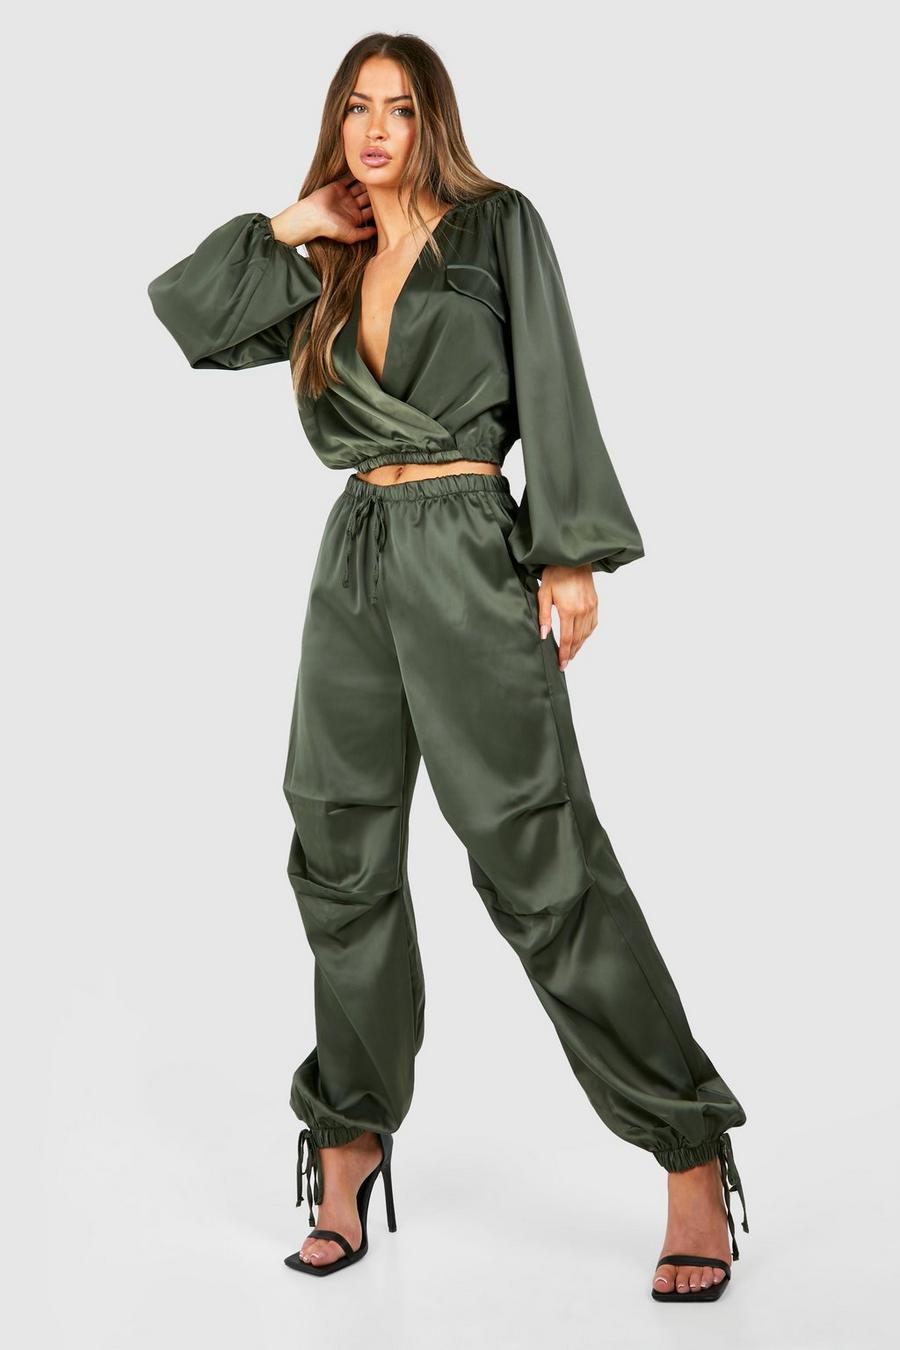 Khaki Leg Avenue seamless solutions crop top and legging short set in tan